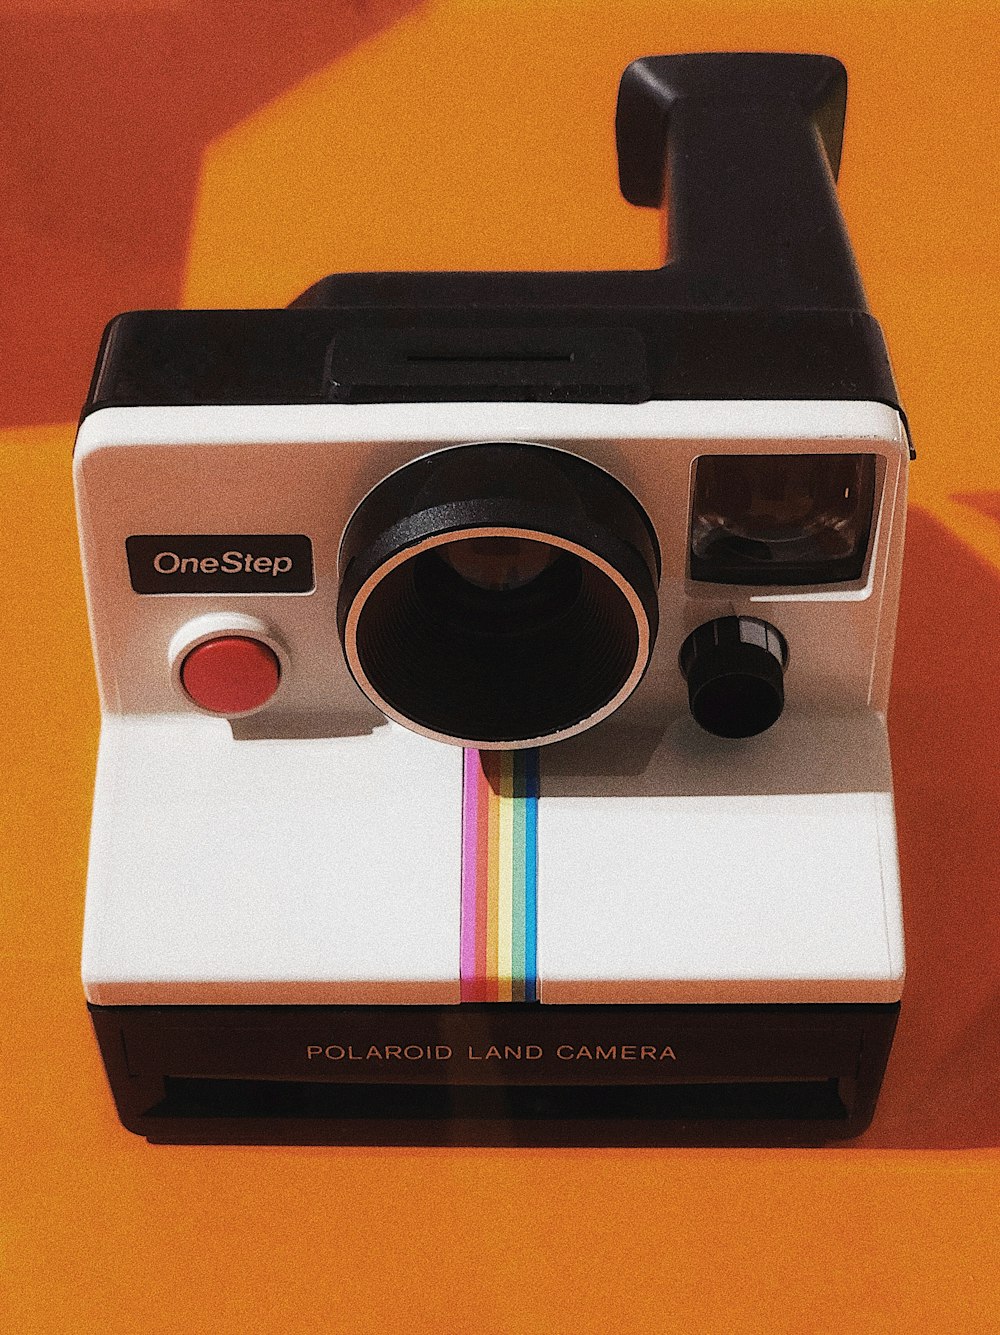 white and black Polaroid OneStep land camera